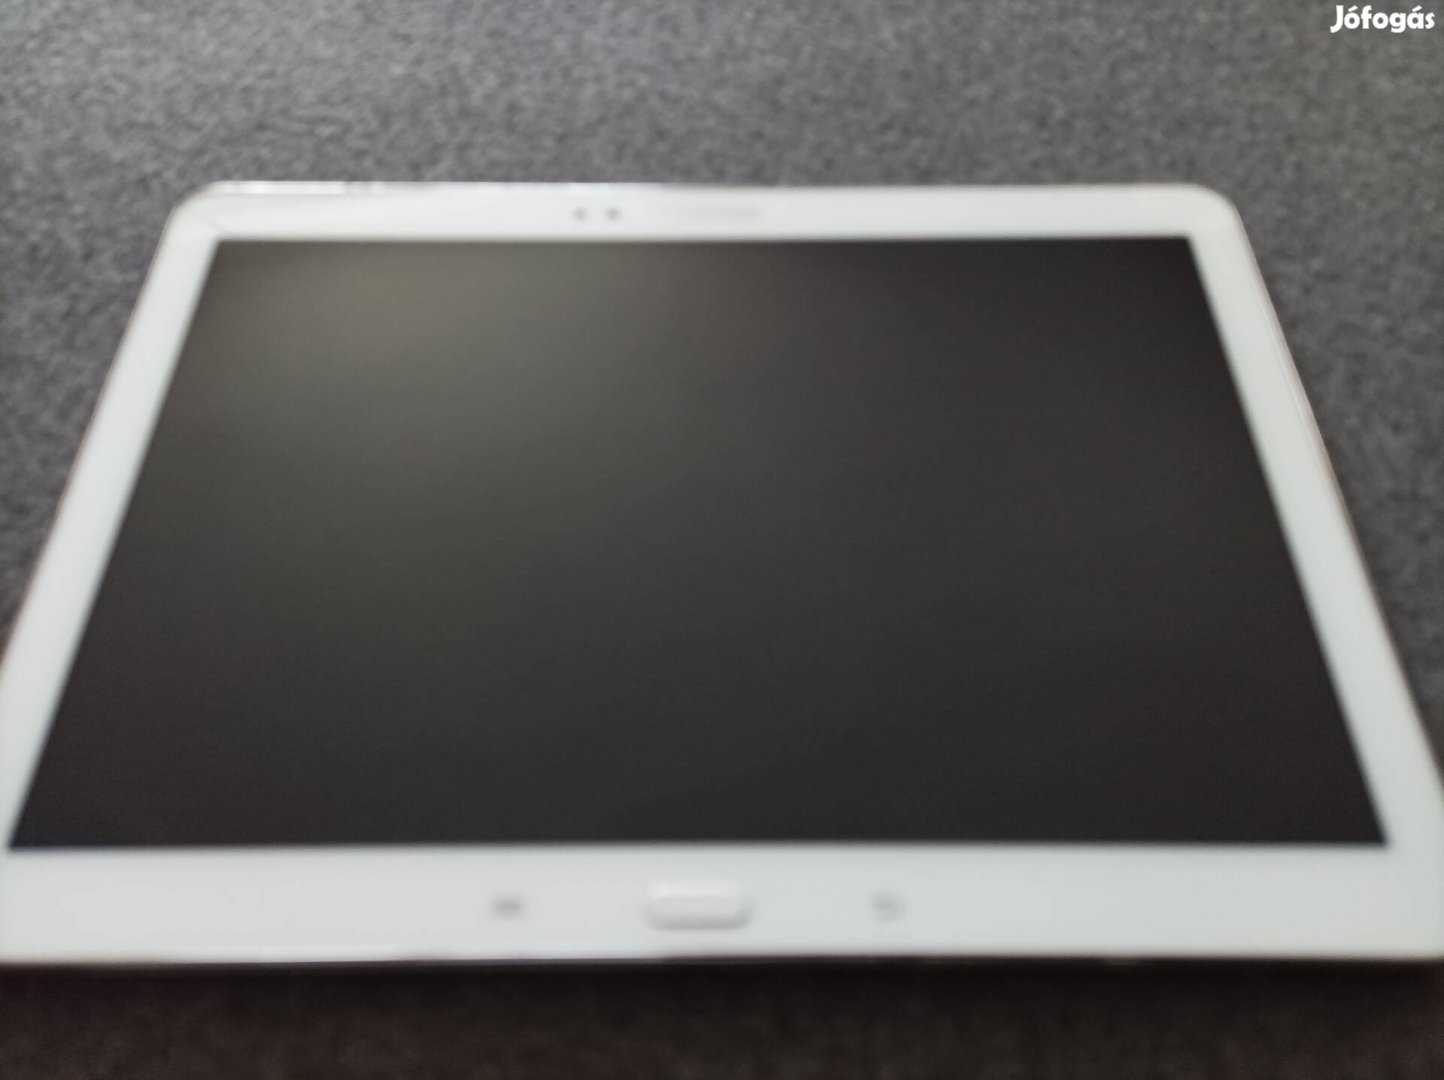 Samsung Galaxy note 10 tablet 